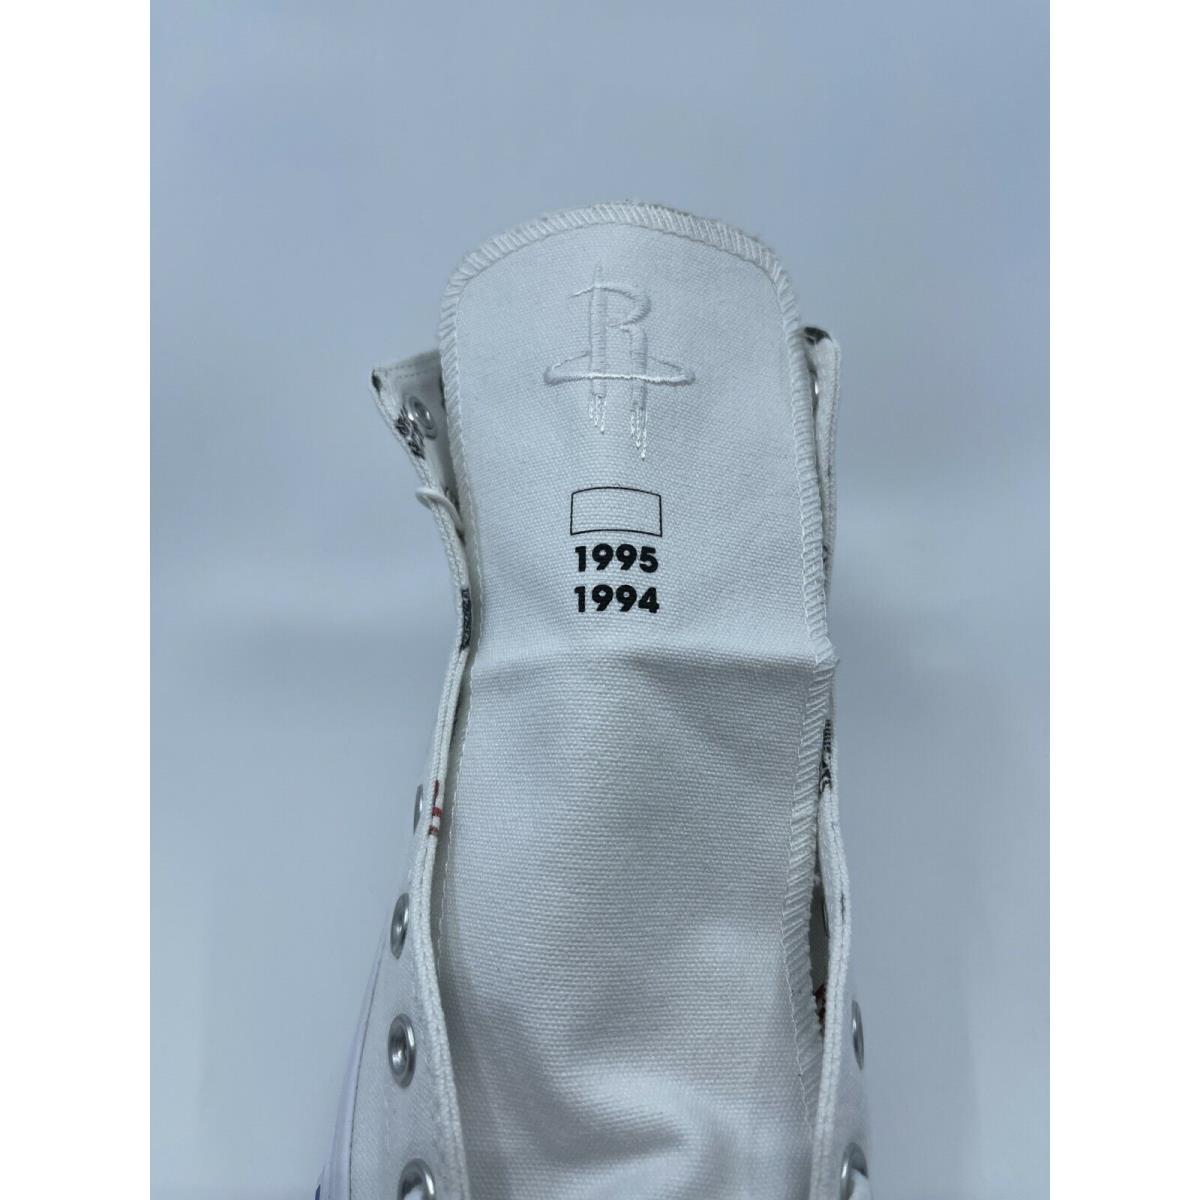 Converse shoes  - White 5